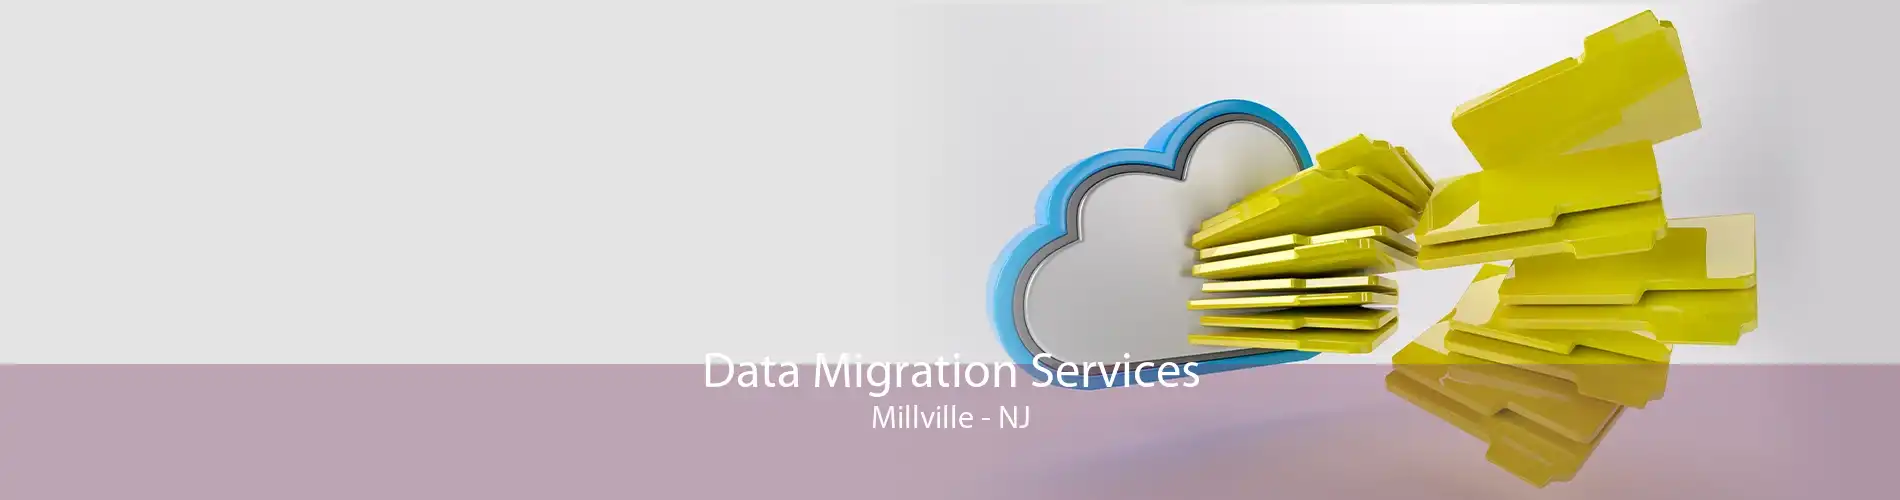 Data Migration Services Millville - NJ